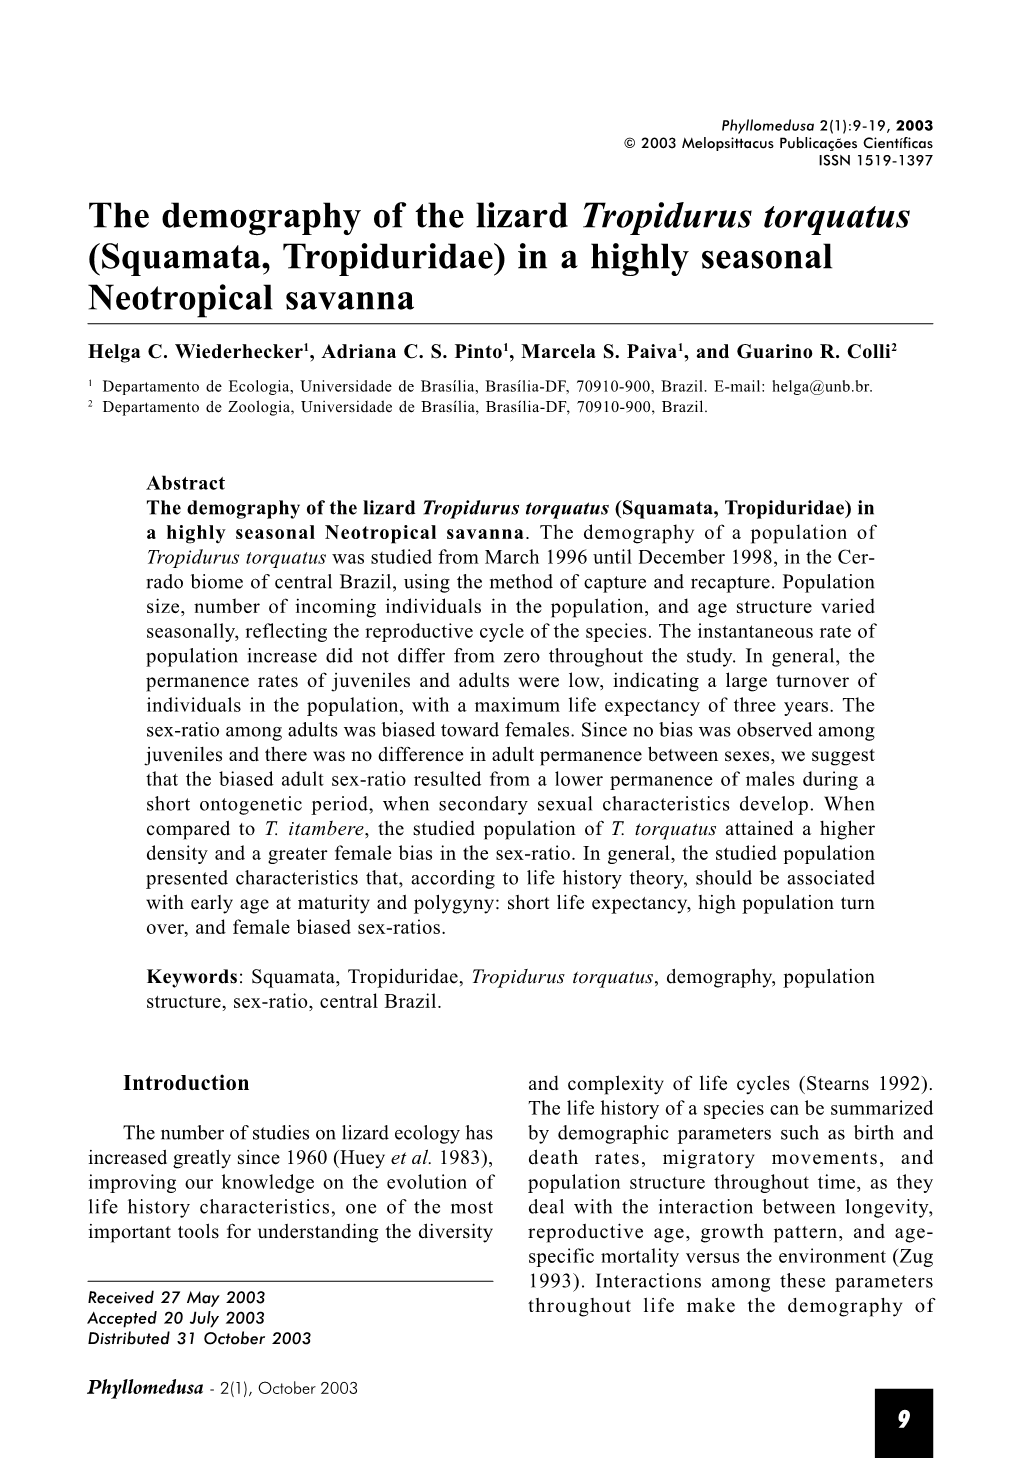 The Demography of the Lizard Tropidurus Torquatus (Squamata, Tropiduridae) in a Highly Seasonal Neotropical Savanna